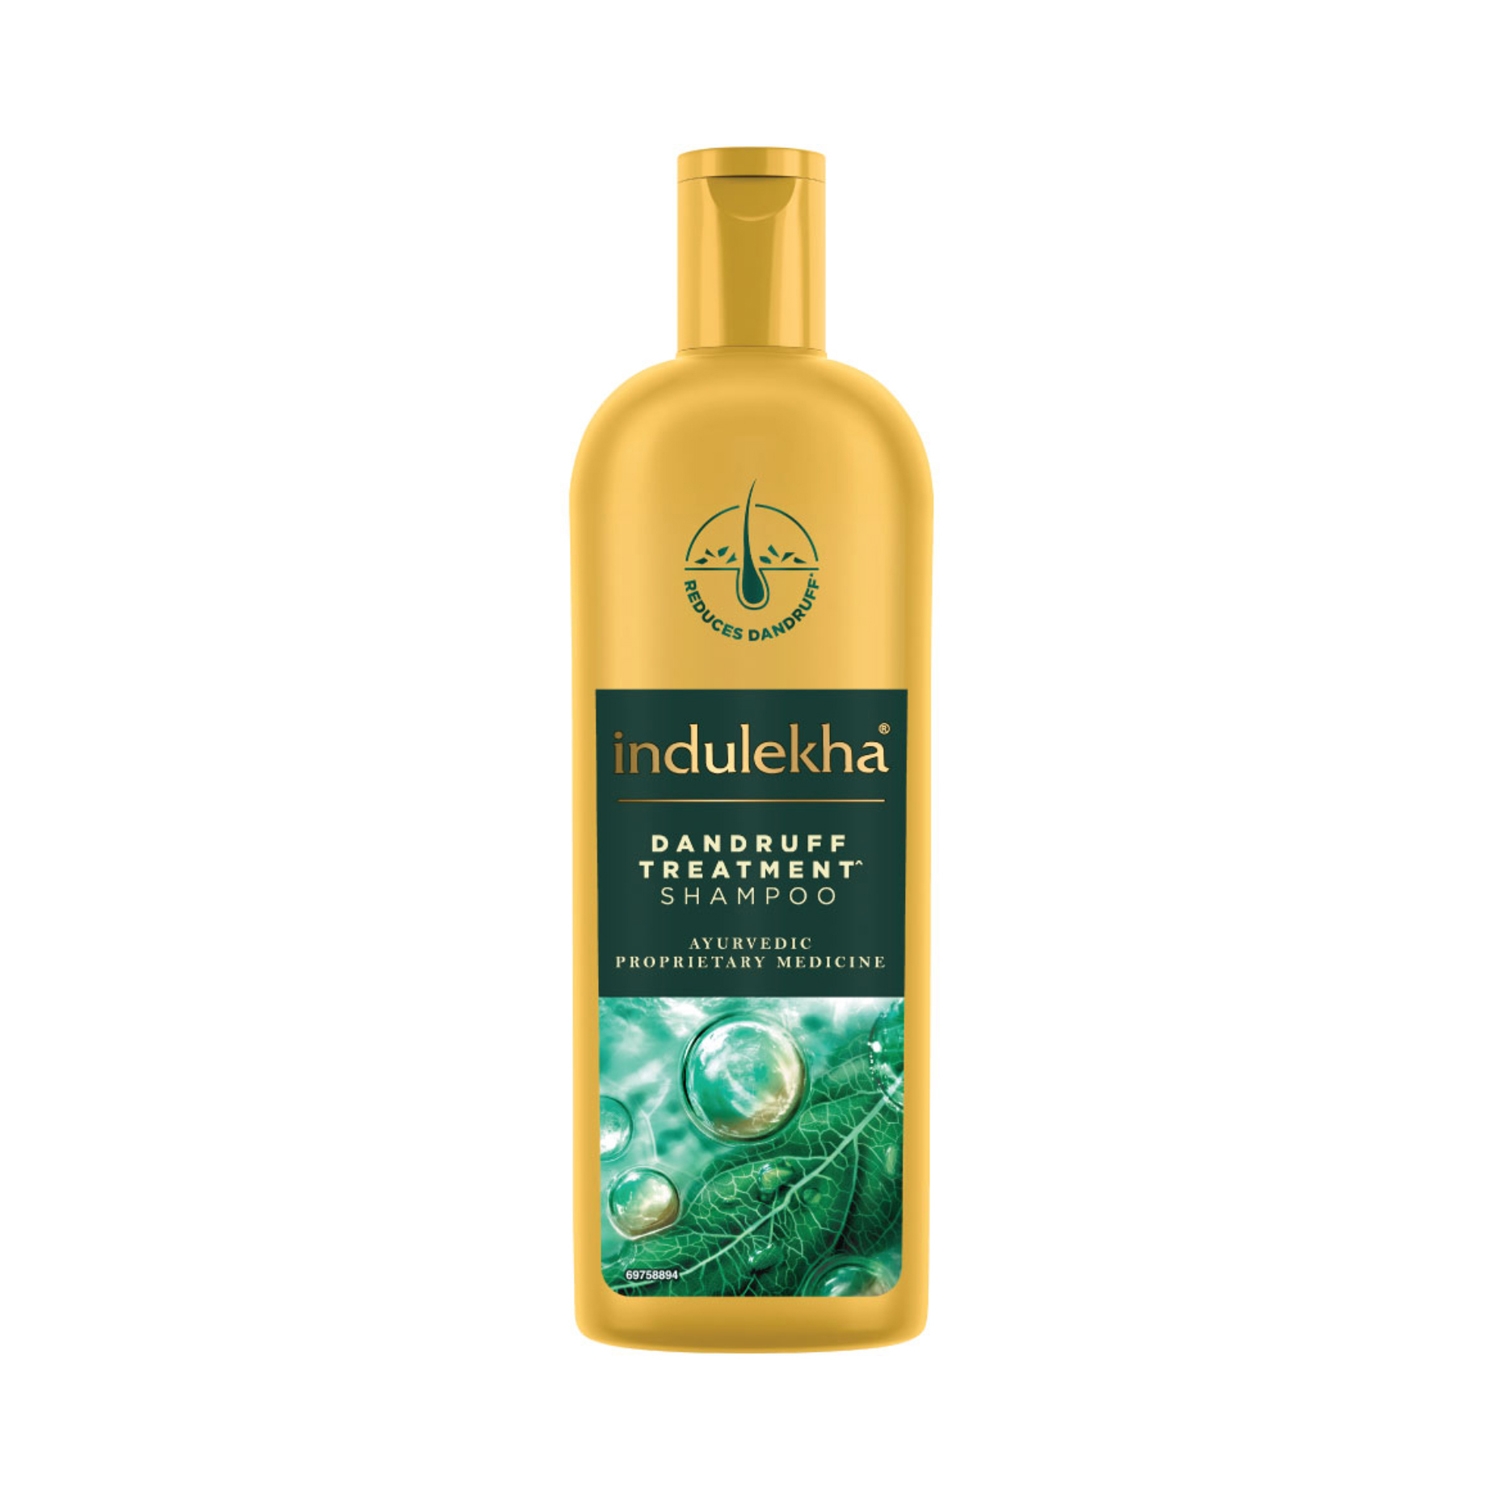 Indulekha Dandruff Treatment Shampoo (340ml)